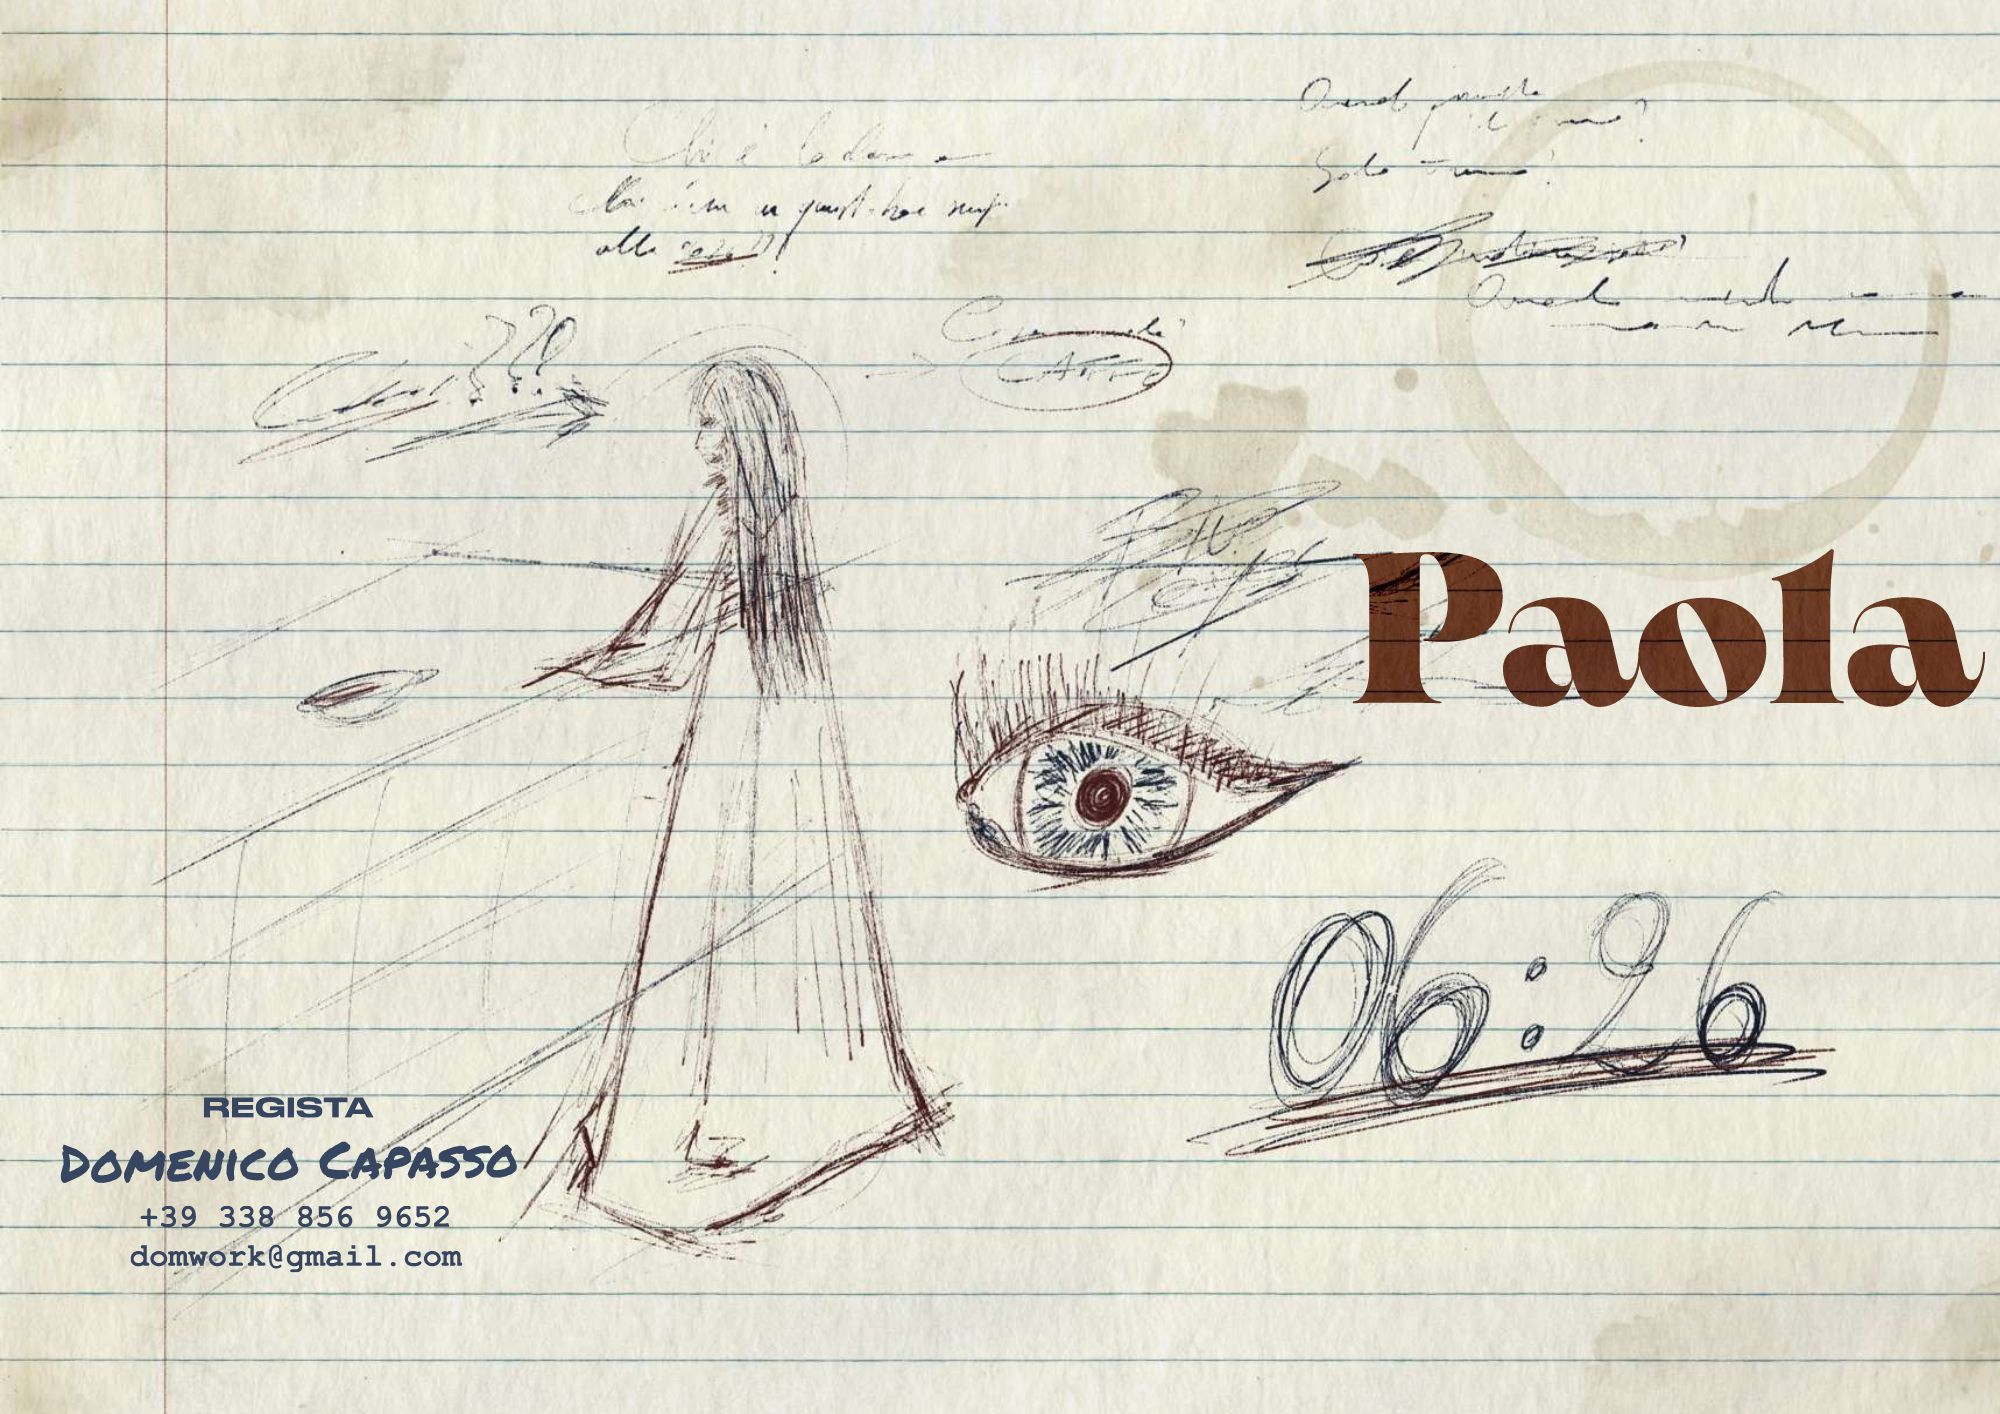 PAOLA: a short movie by Domenico Capasso.